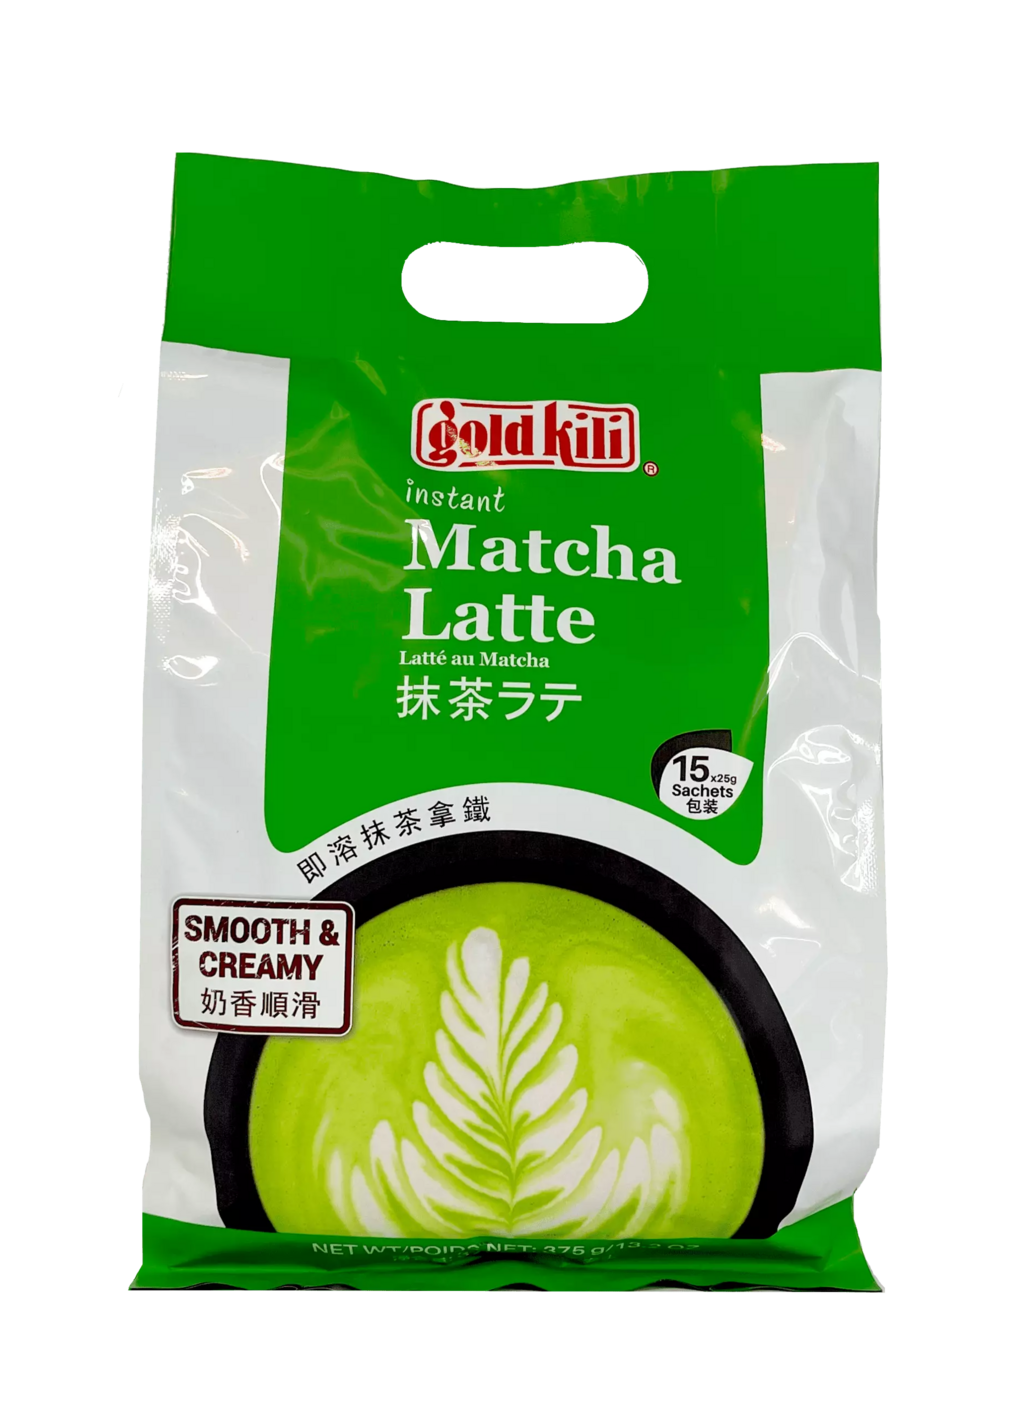 Instant Matcha Latte 375g Gold Kili Singapore